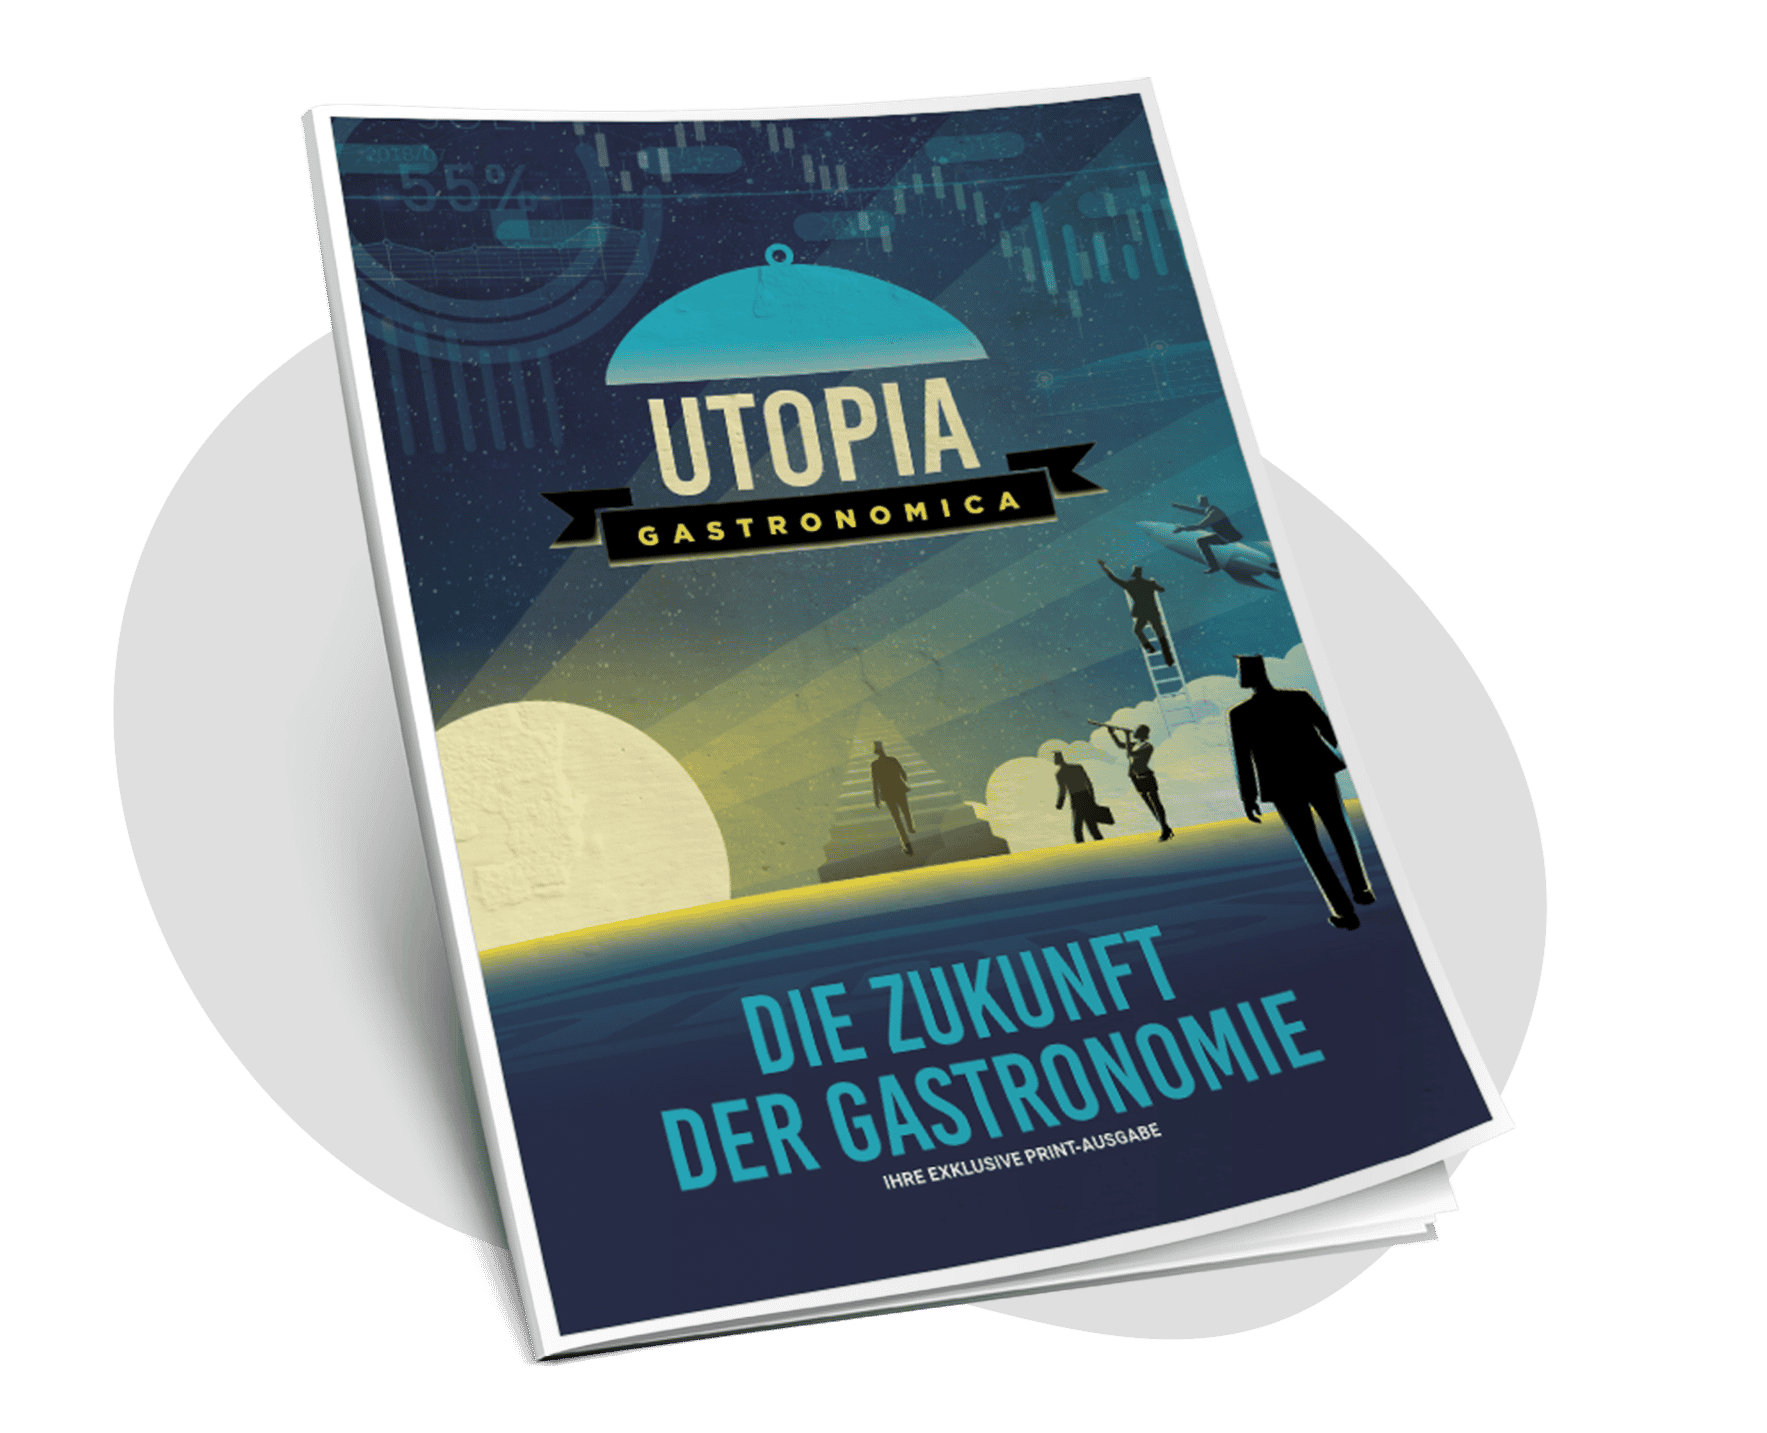 Utopia Gastronomica - Die Zukunft der Gastronomie